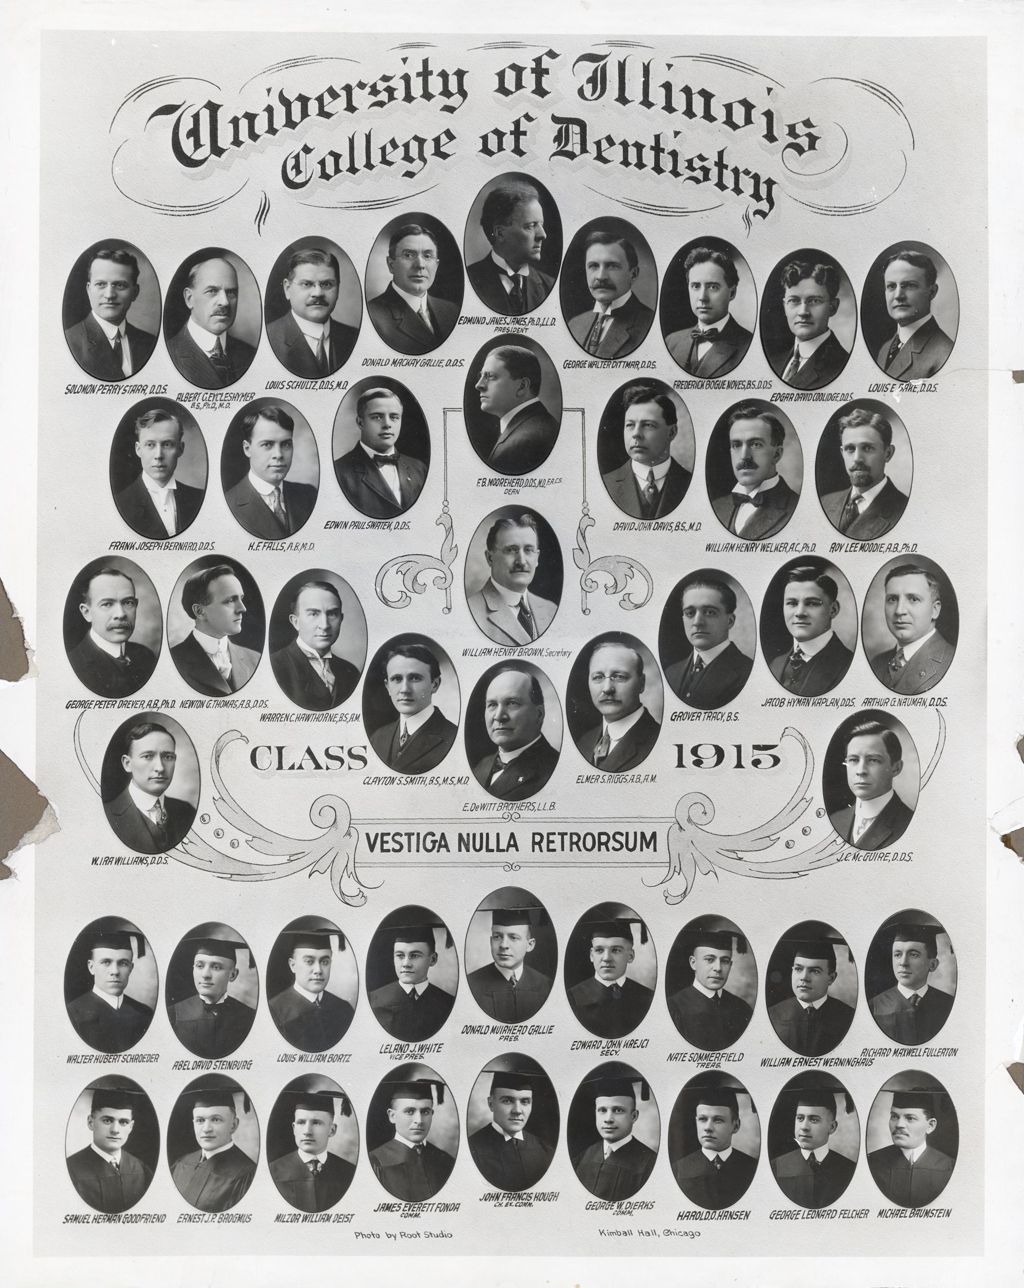 Miniature of 1915 graduating class, University of Illinois College of Dentistry